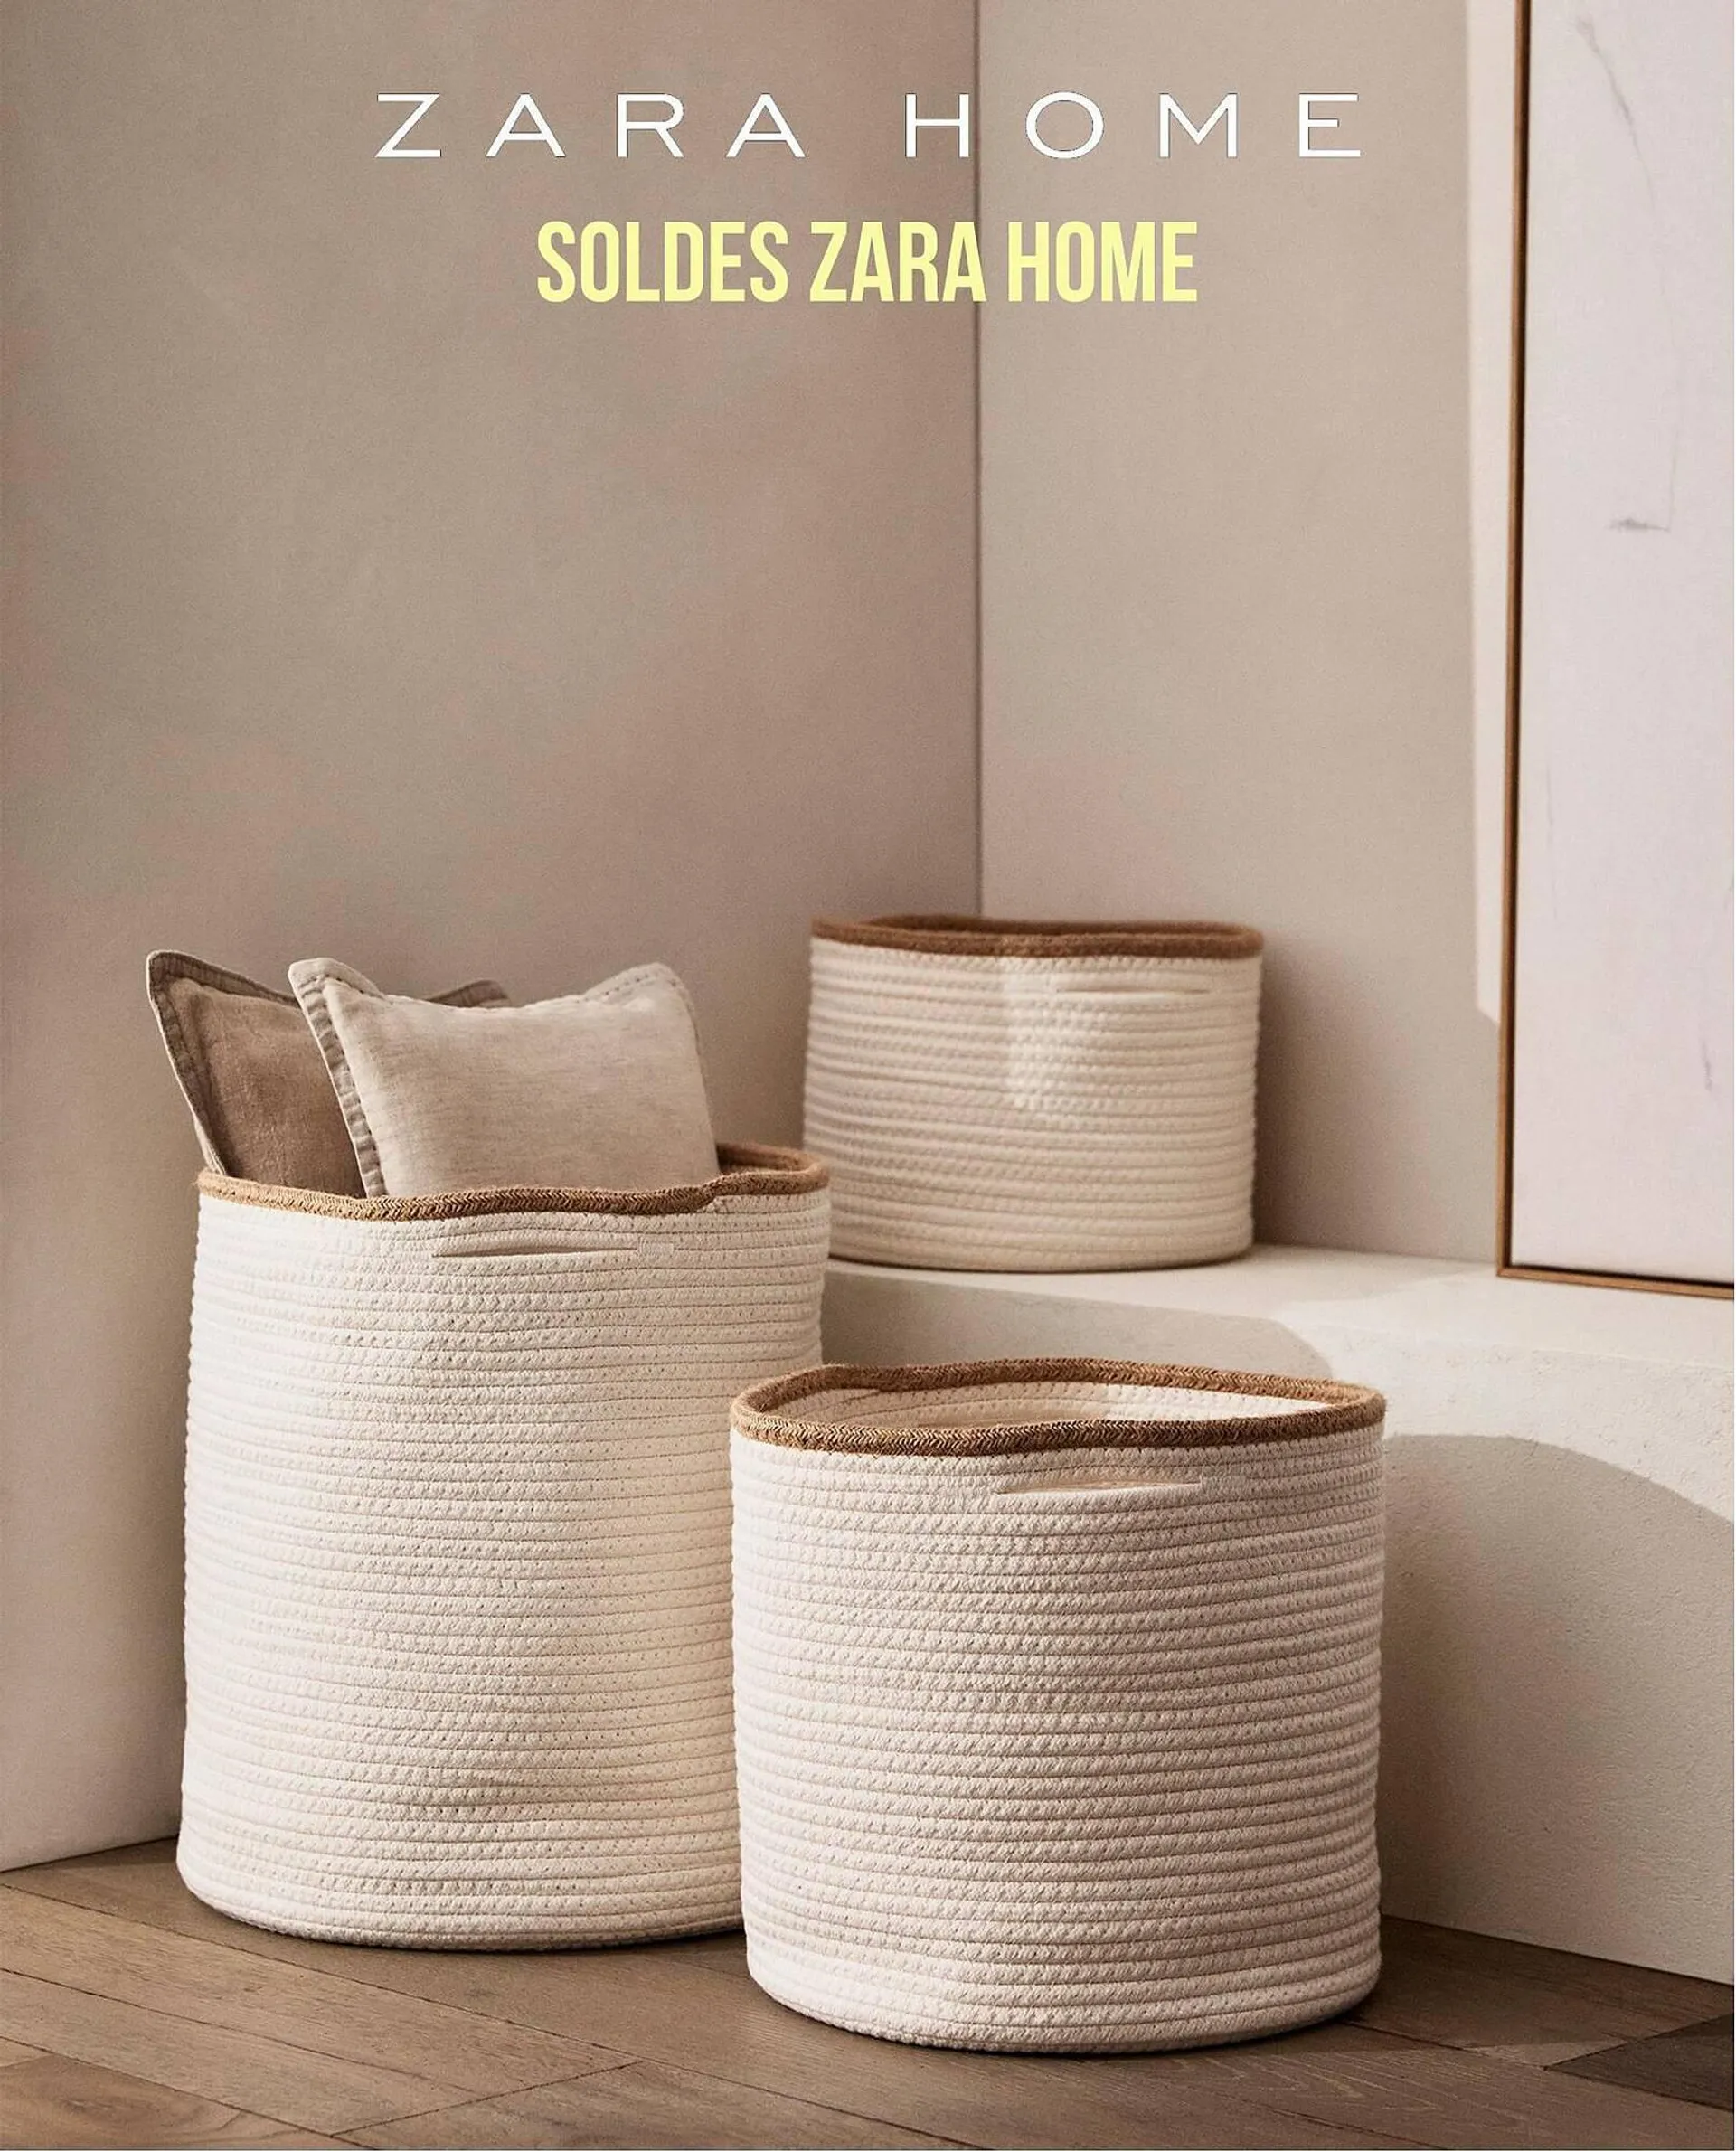 Catalogue Zara Home - 1